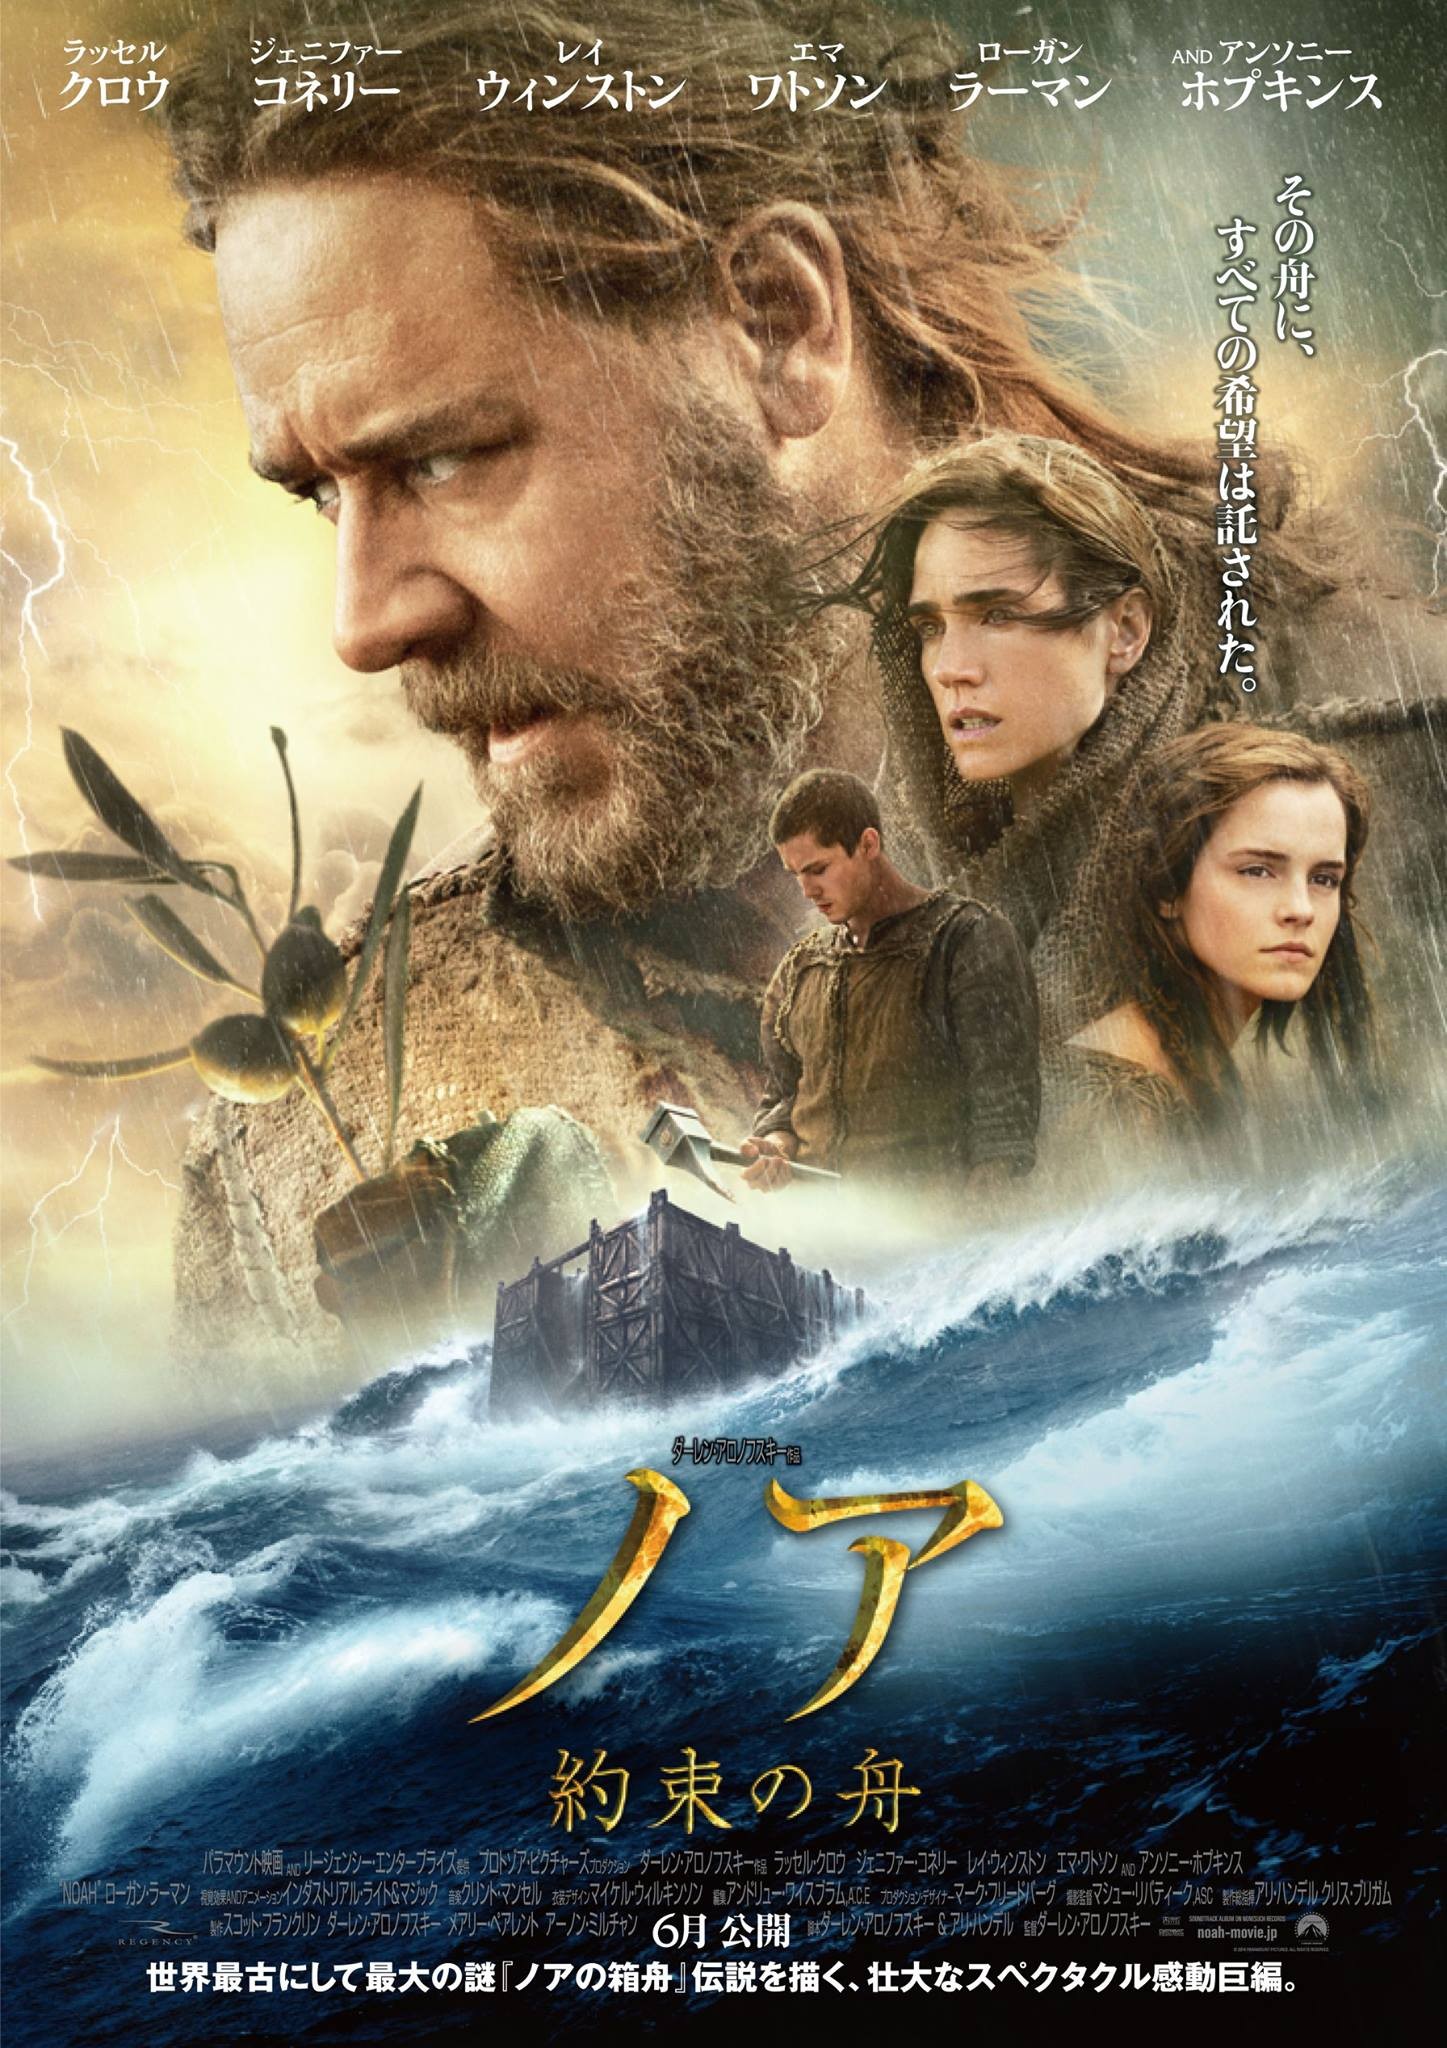 Mega Sized Movie Poster Image for Noah (#12 of 13)